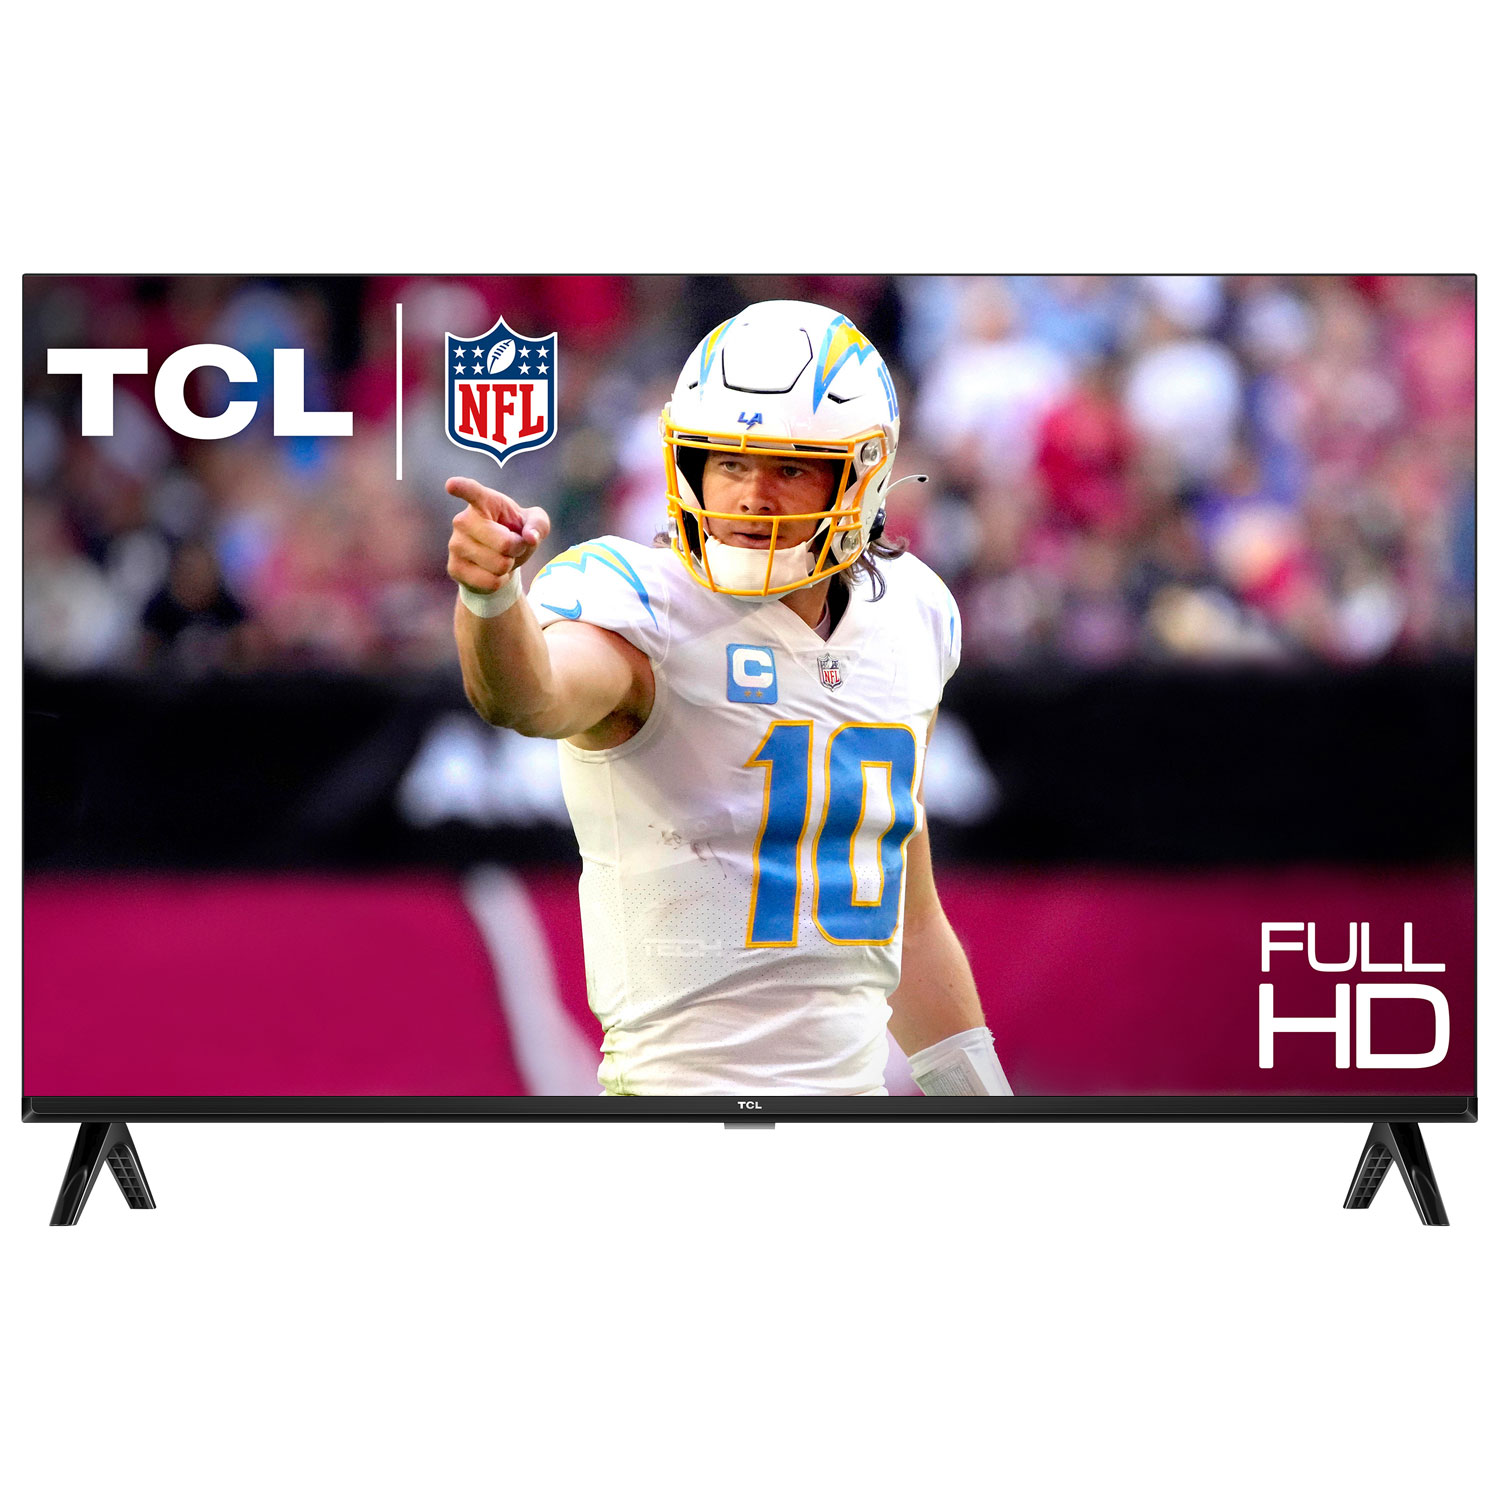 TCL 32" S-Class 1080p HD HDR LED Smart Google TV (32S350G-CA) - 2023